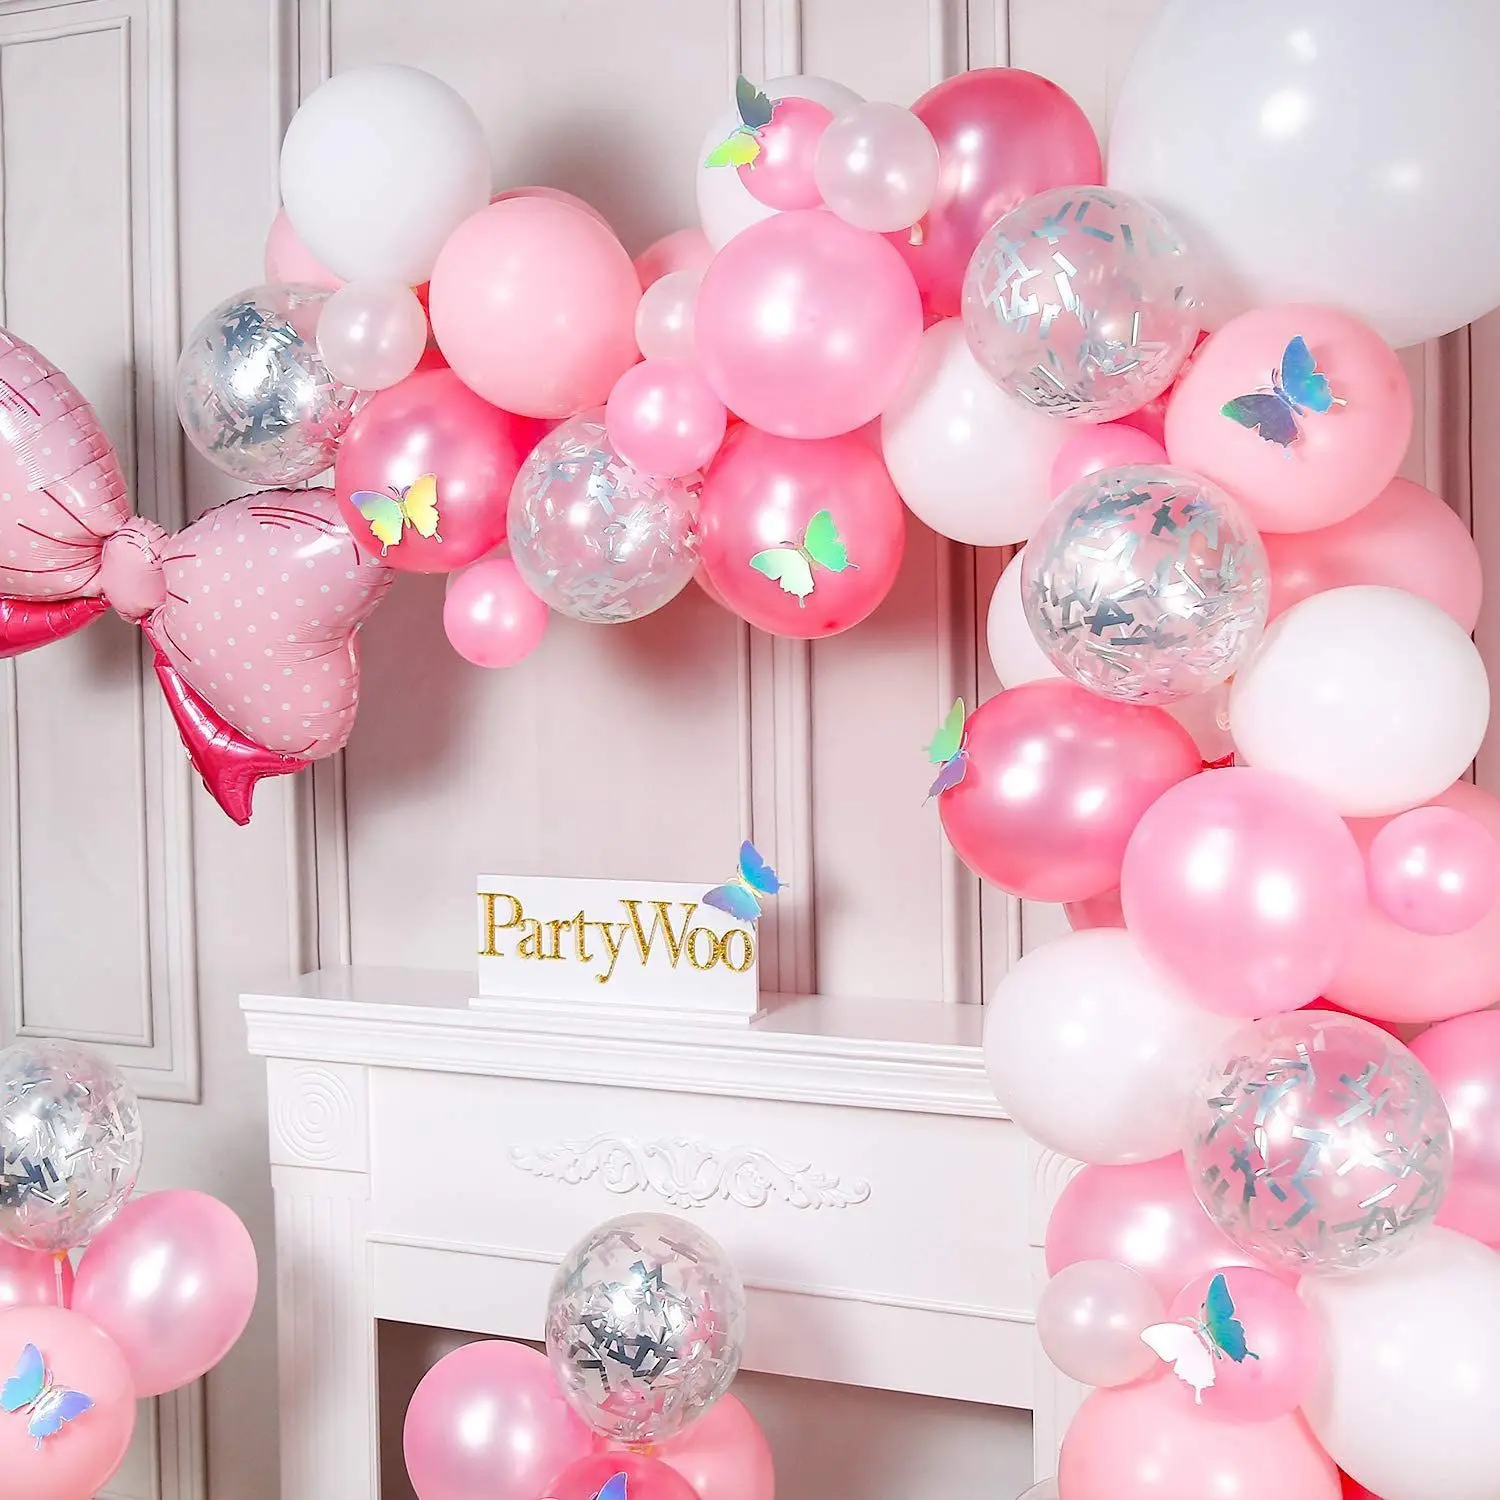 

SURSURPIRSE Romantic Theme Pink White Bowknot Confetti Foil Balloons Garland Arch Set for Women Wedding Valentine's Day Supplies